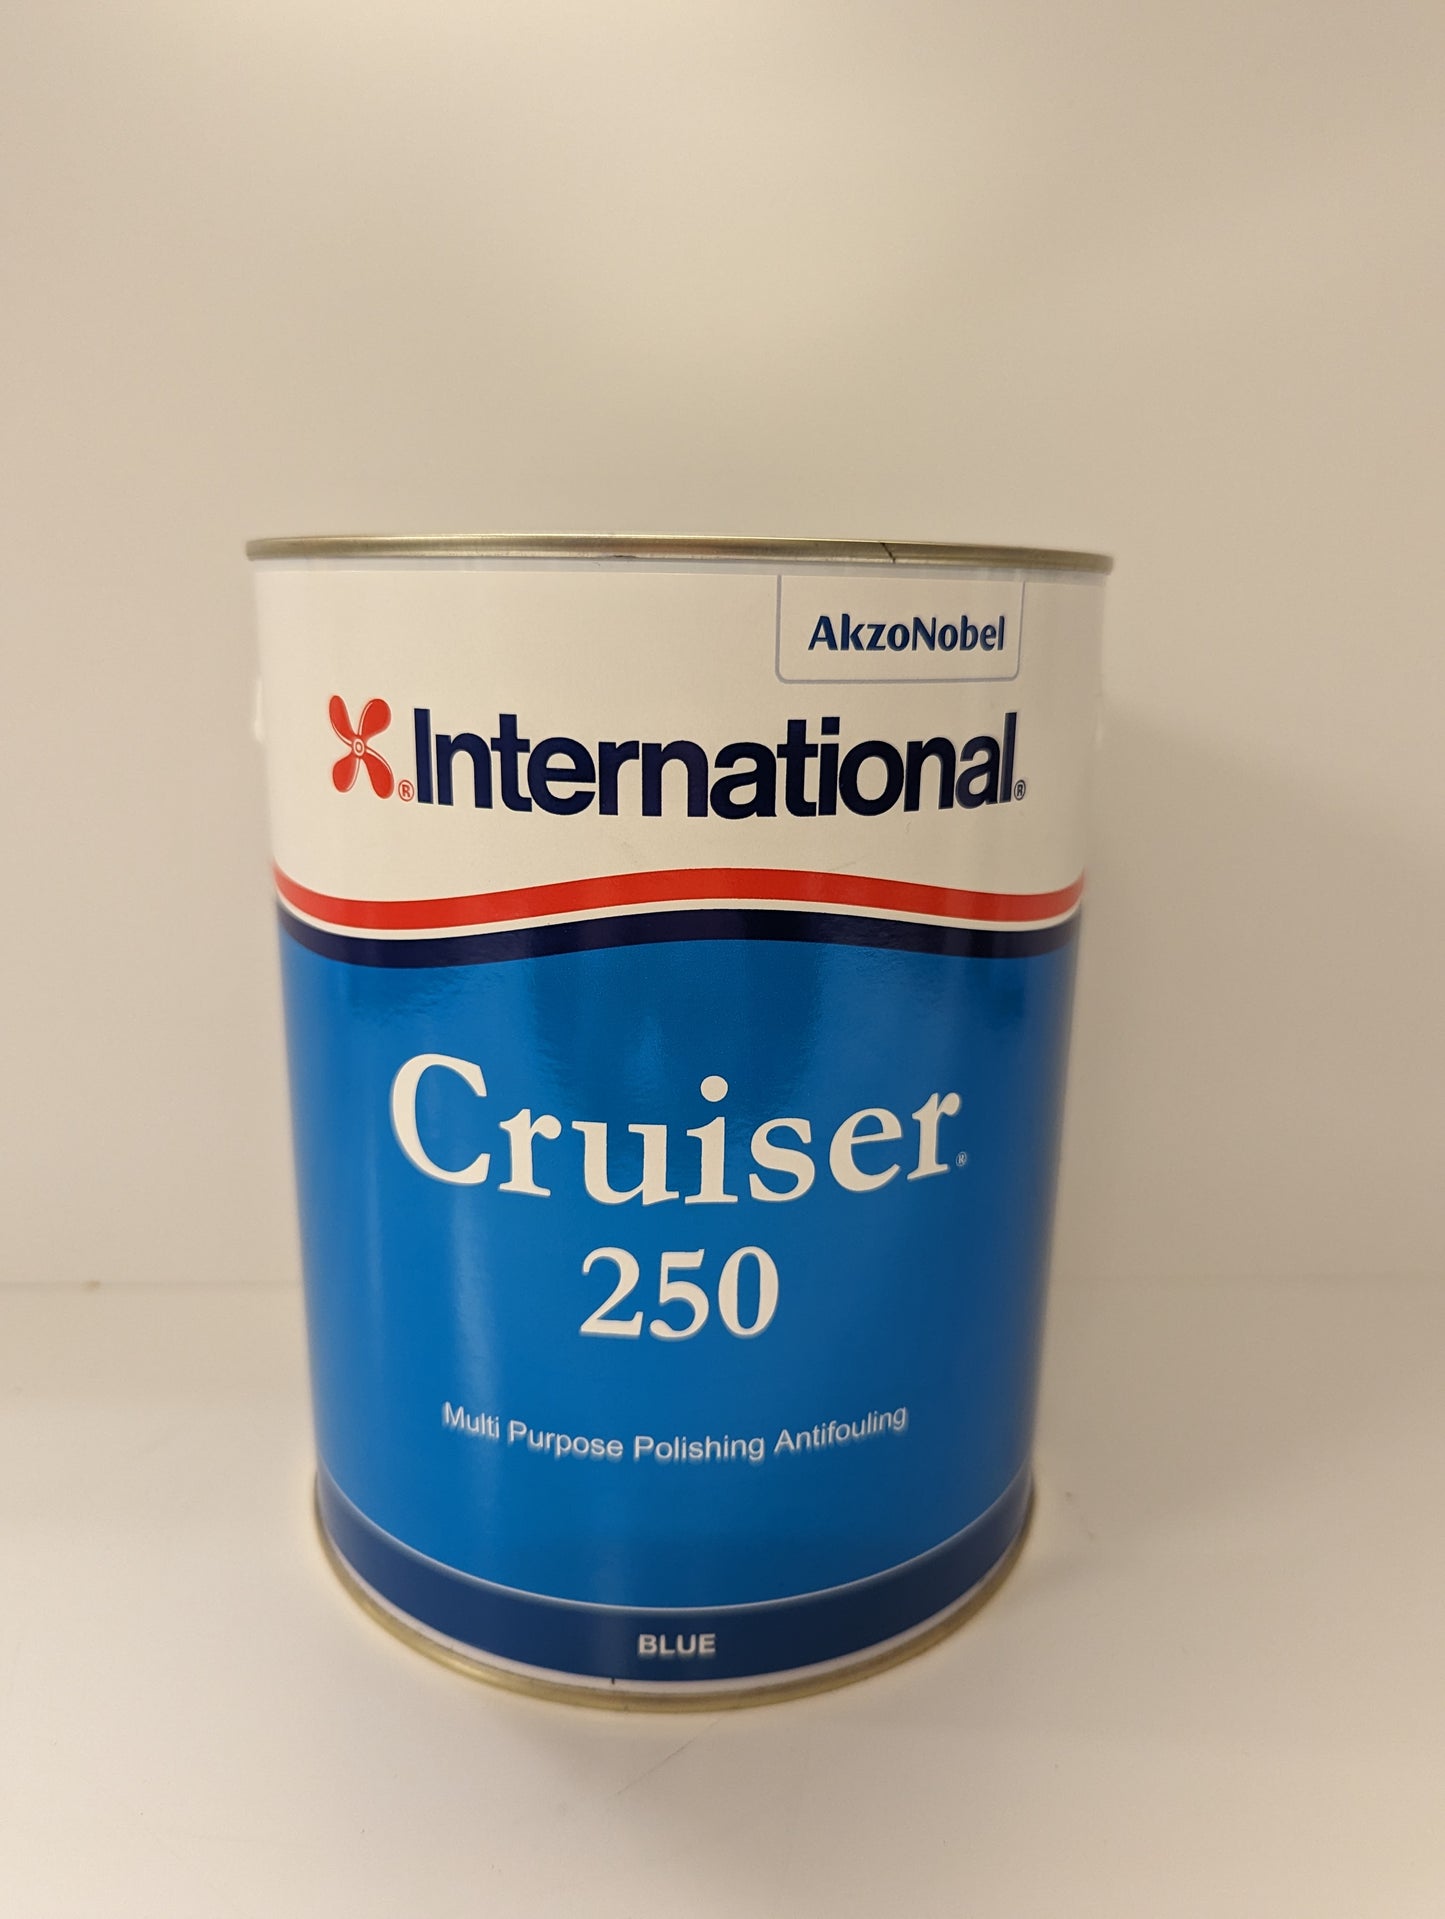 AkzoNobel International Cruiser 250